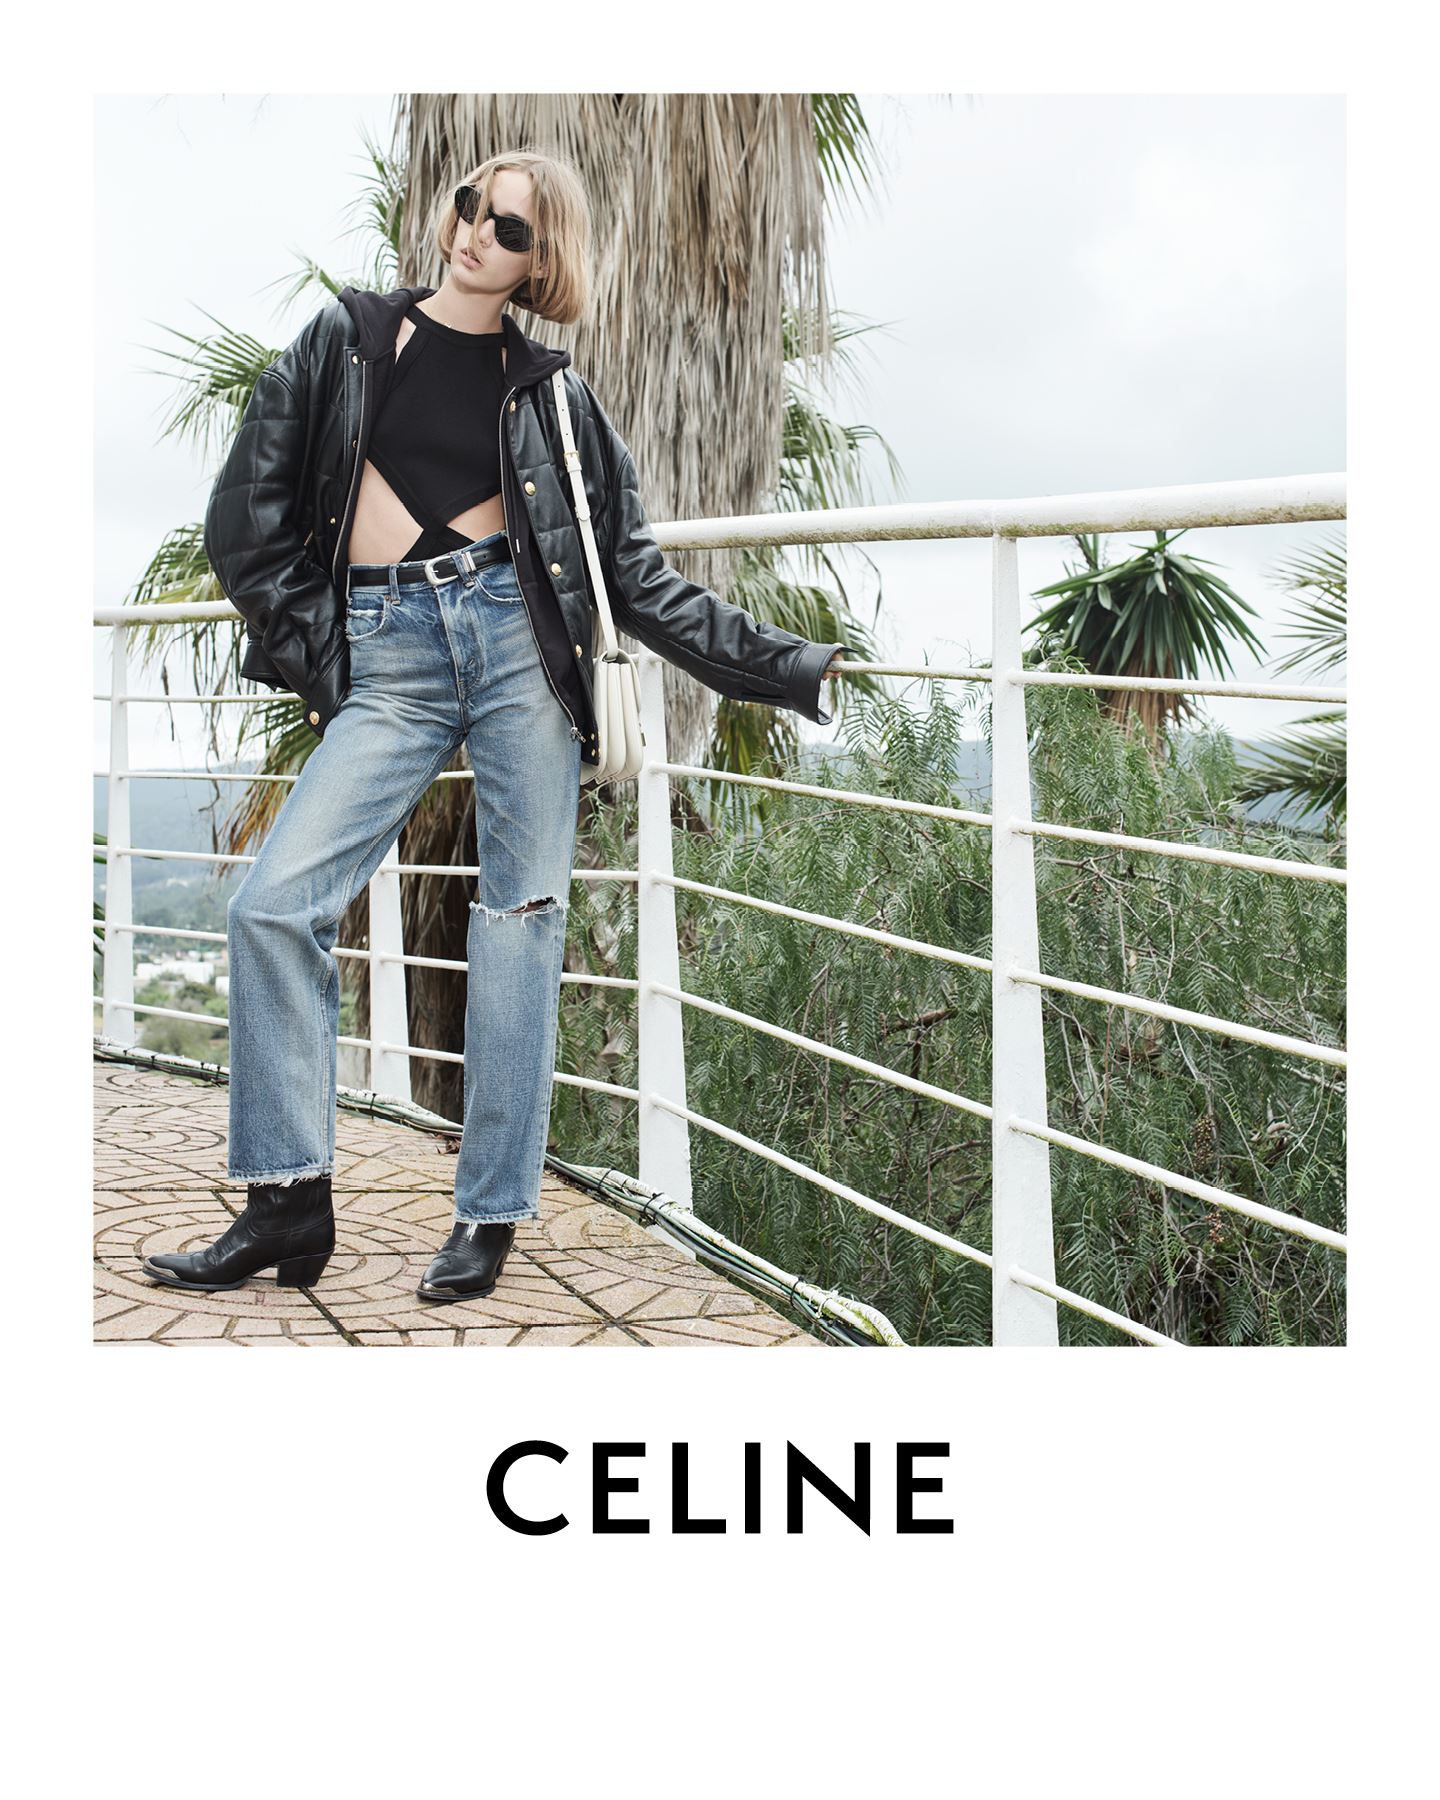 Celine 'Parade' Fall 2021 Ad Campaign | The Impression